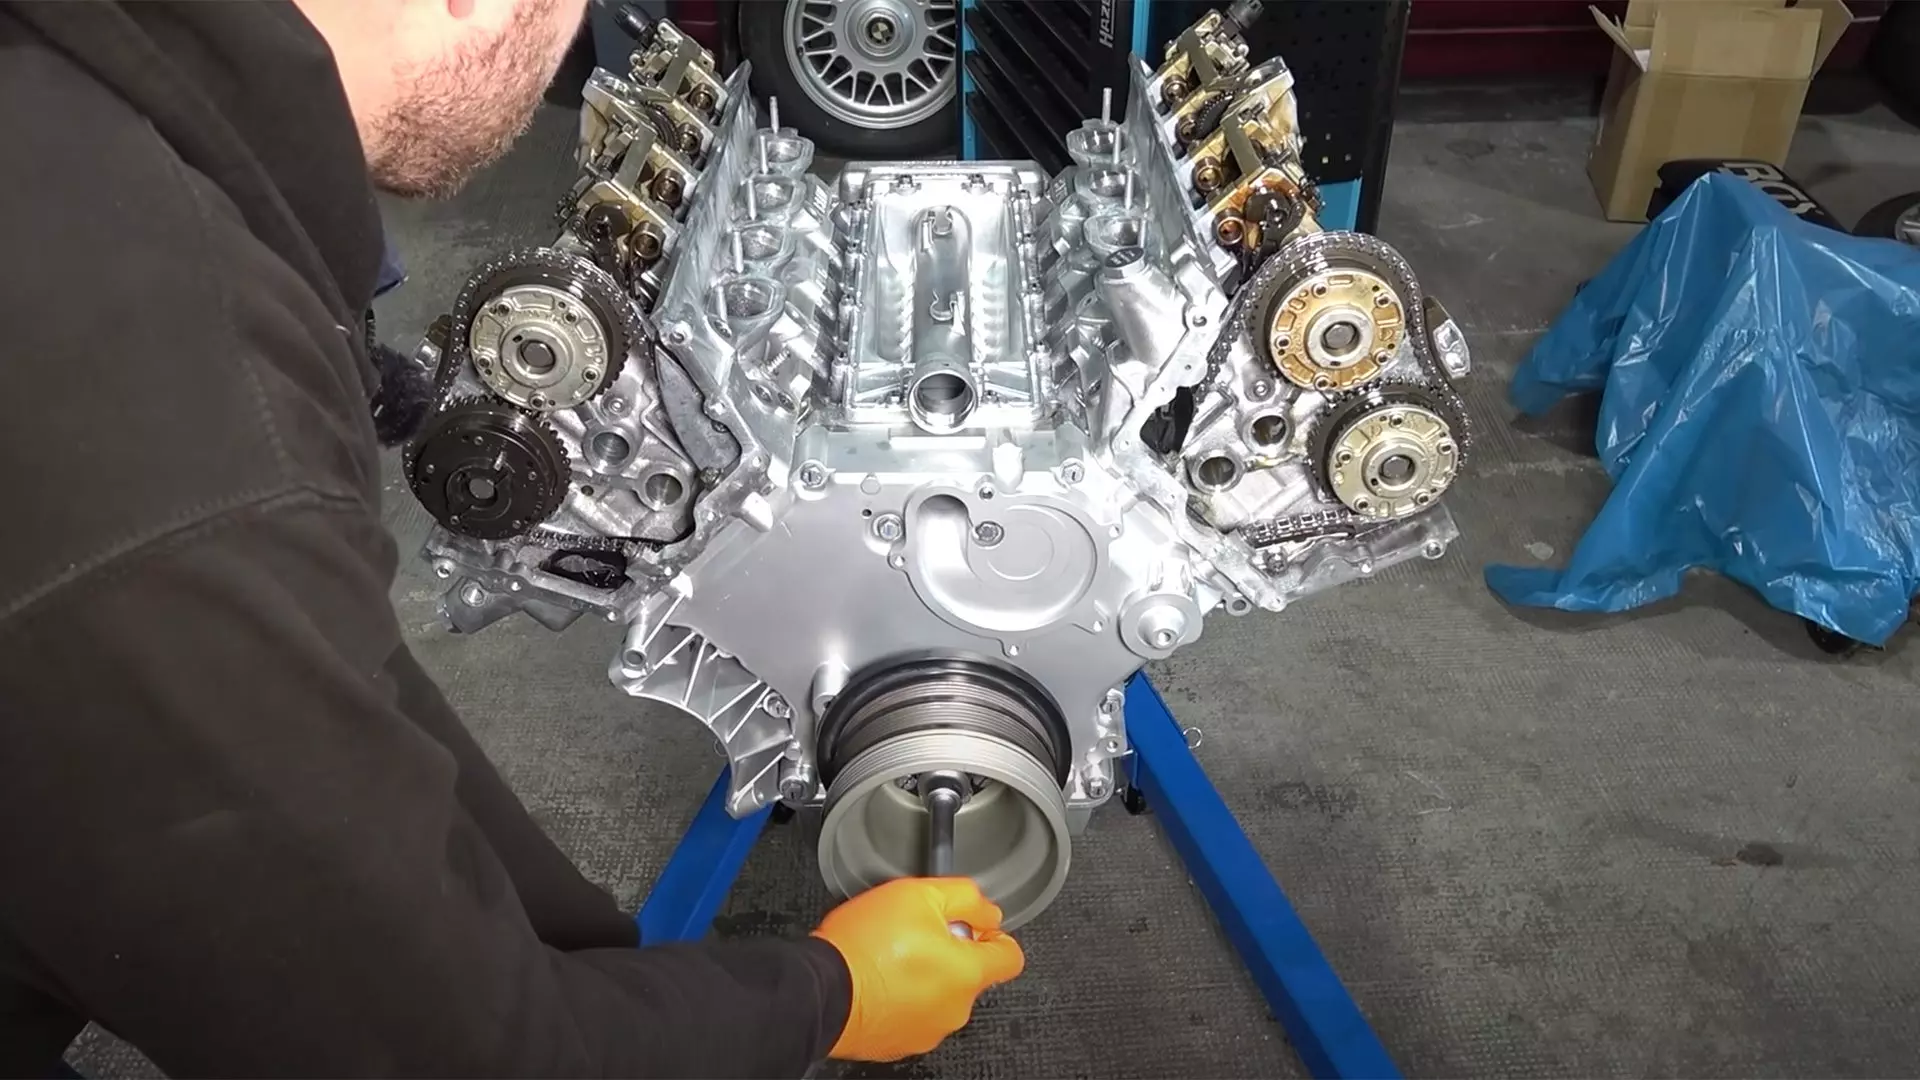 Get Lost in a Therapeutic Alpina B7 Engine Rebuild | Autance